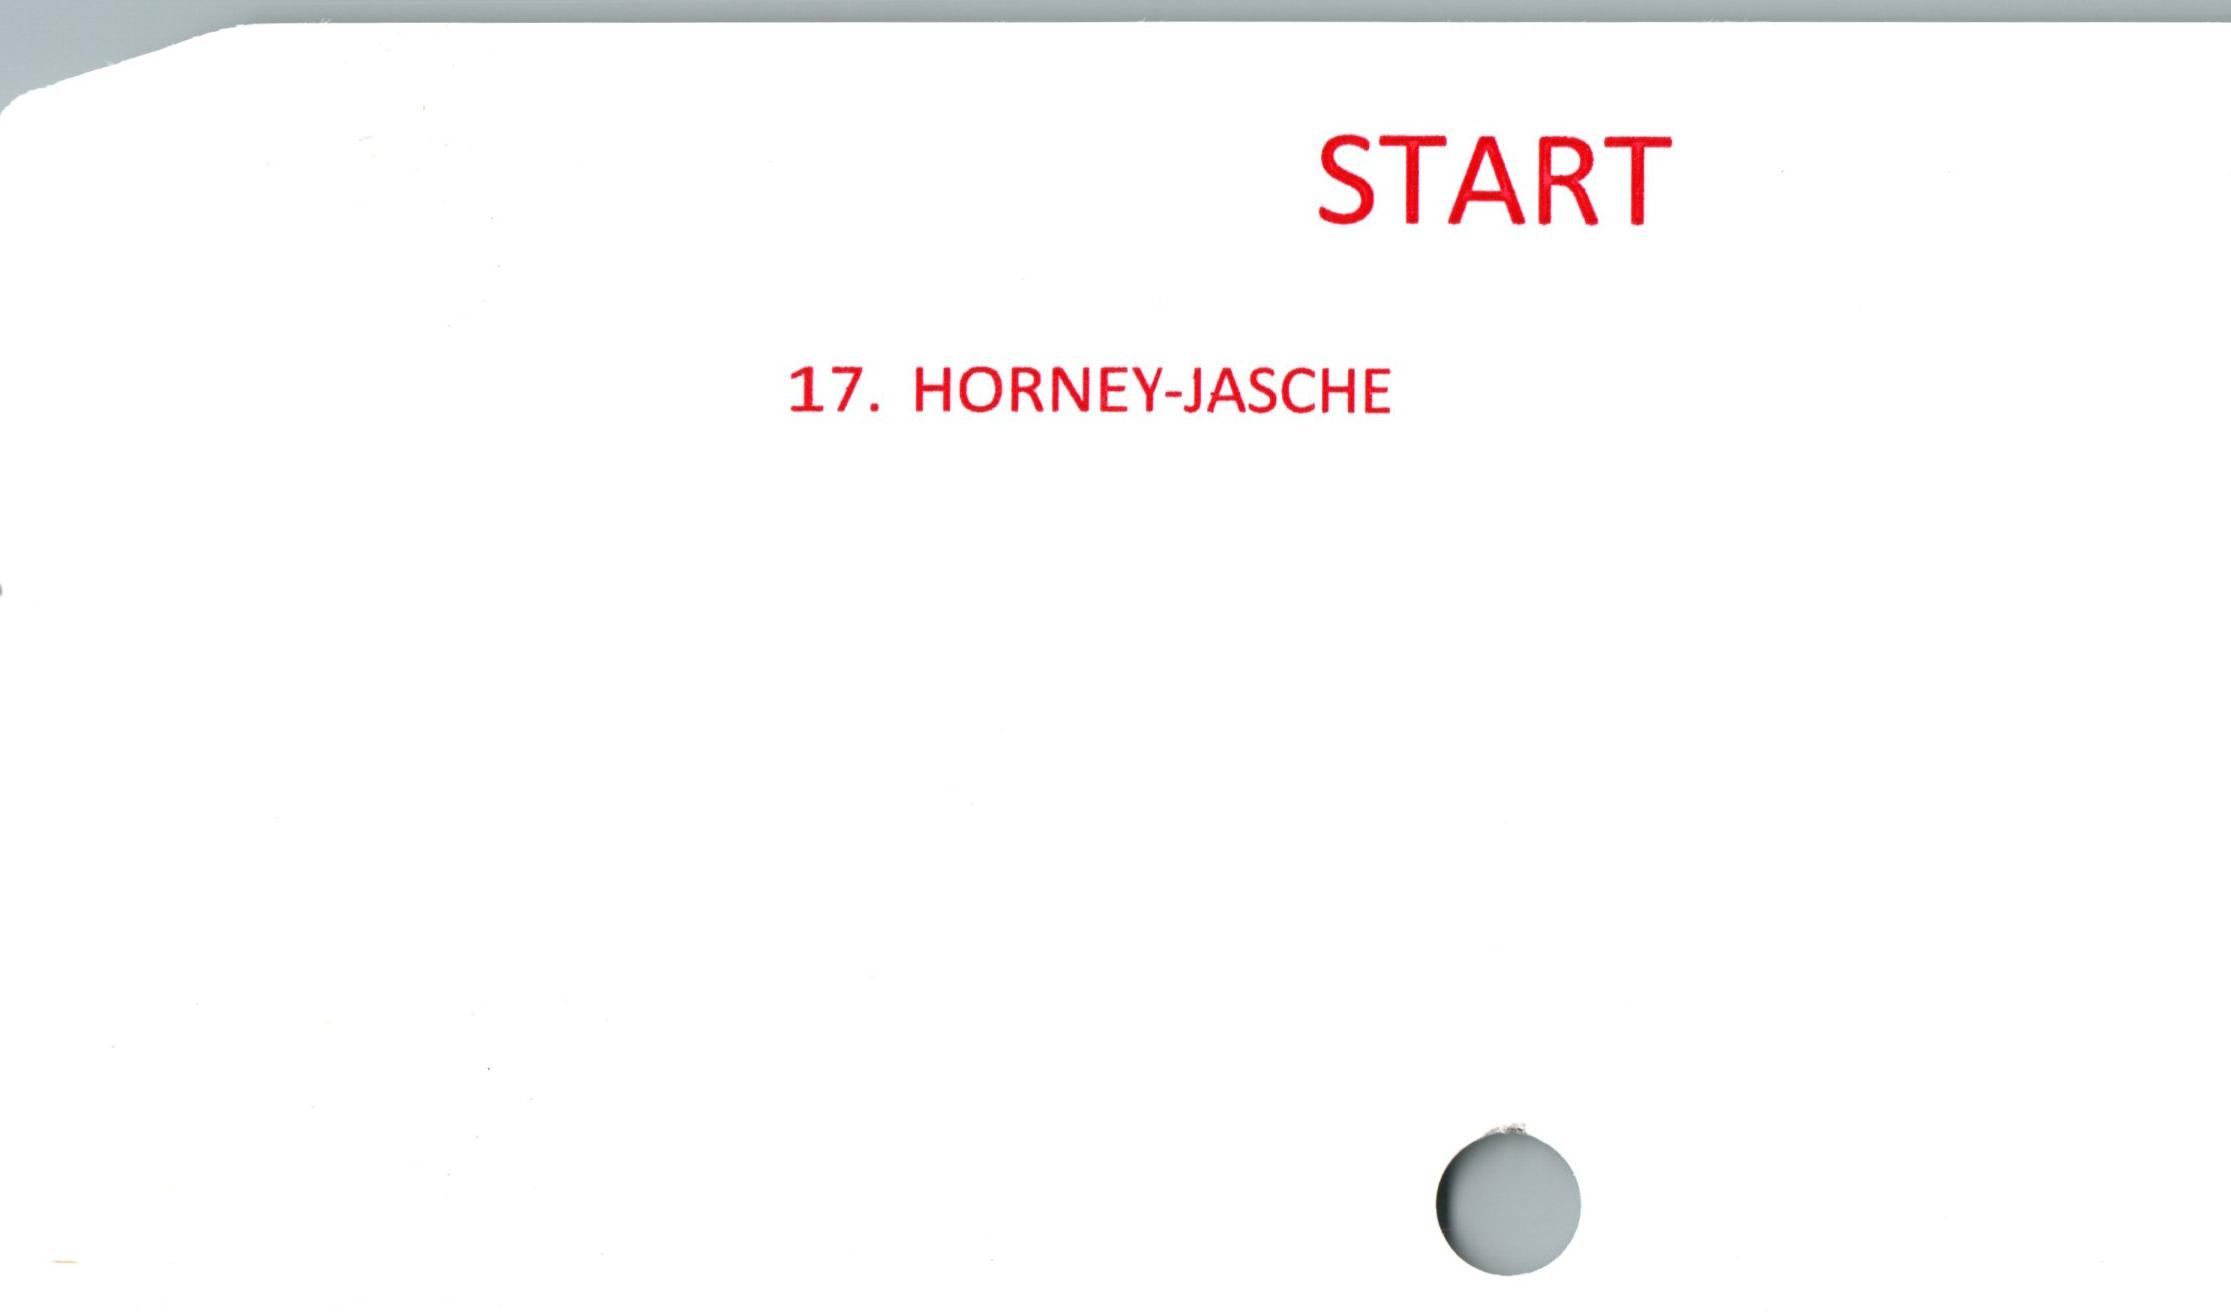  ﻿START

17. HORNEV-JASCHE